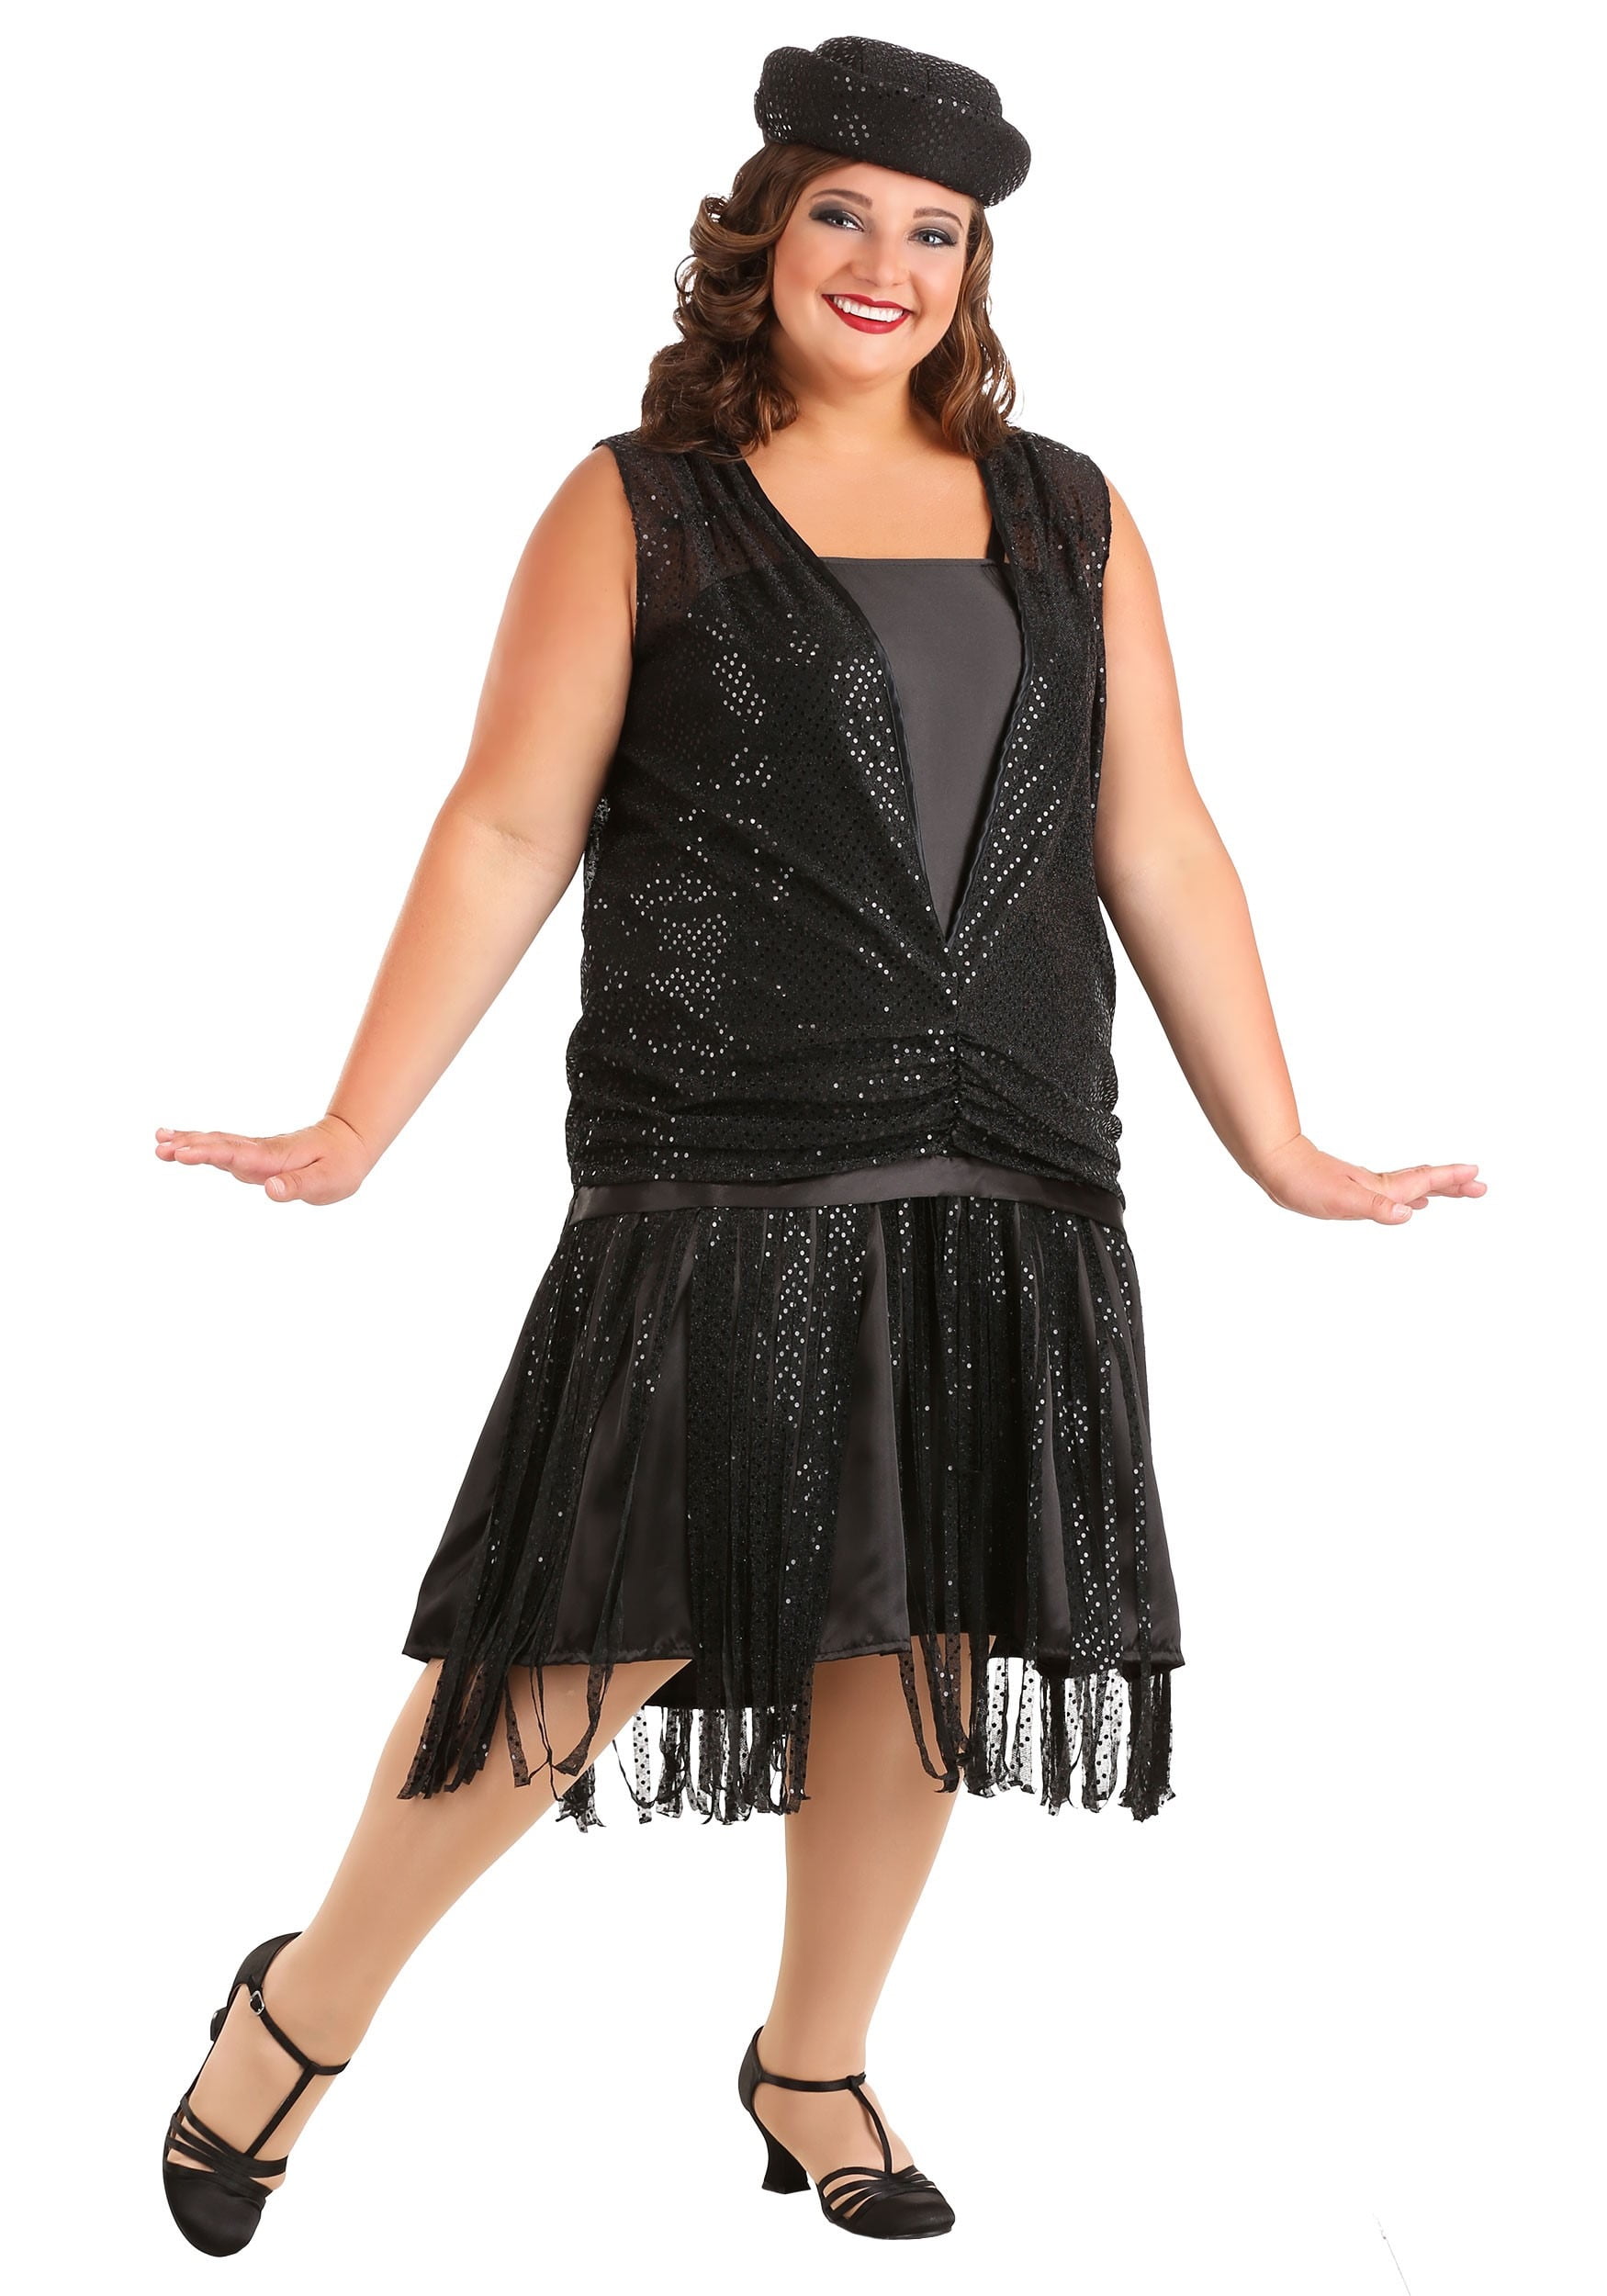 Details about   Leg Avenue "Glamour Flapper" Dress Halloween Costume Plus Size 